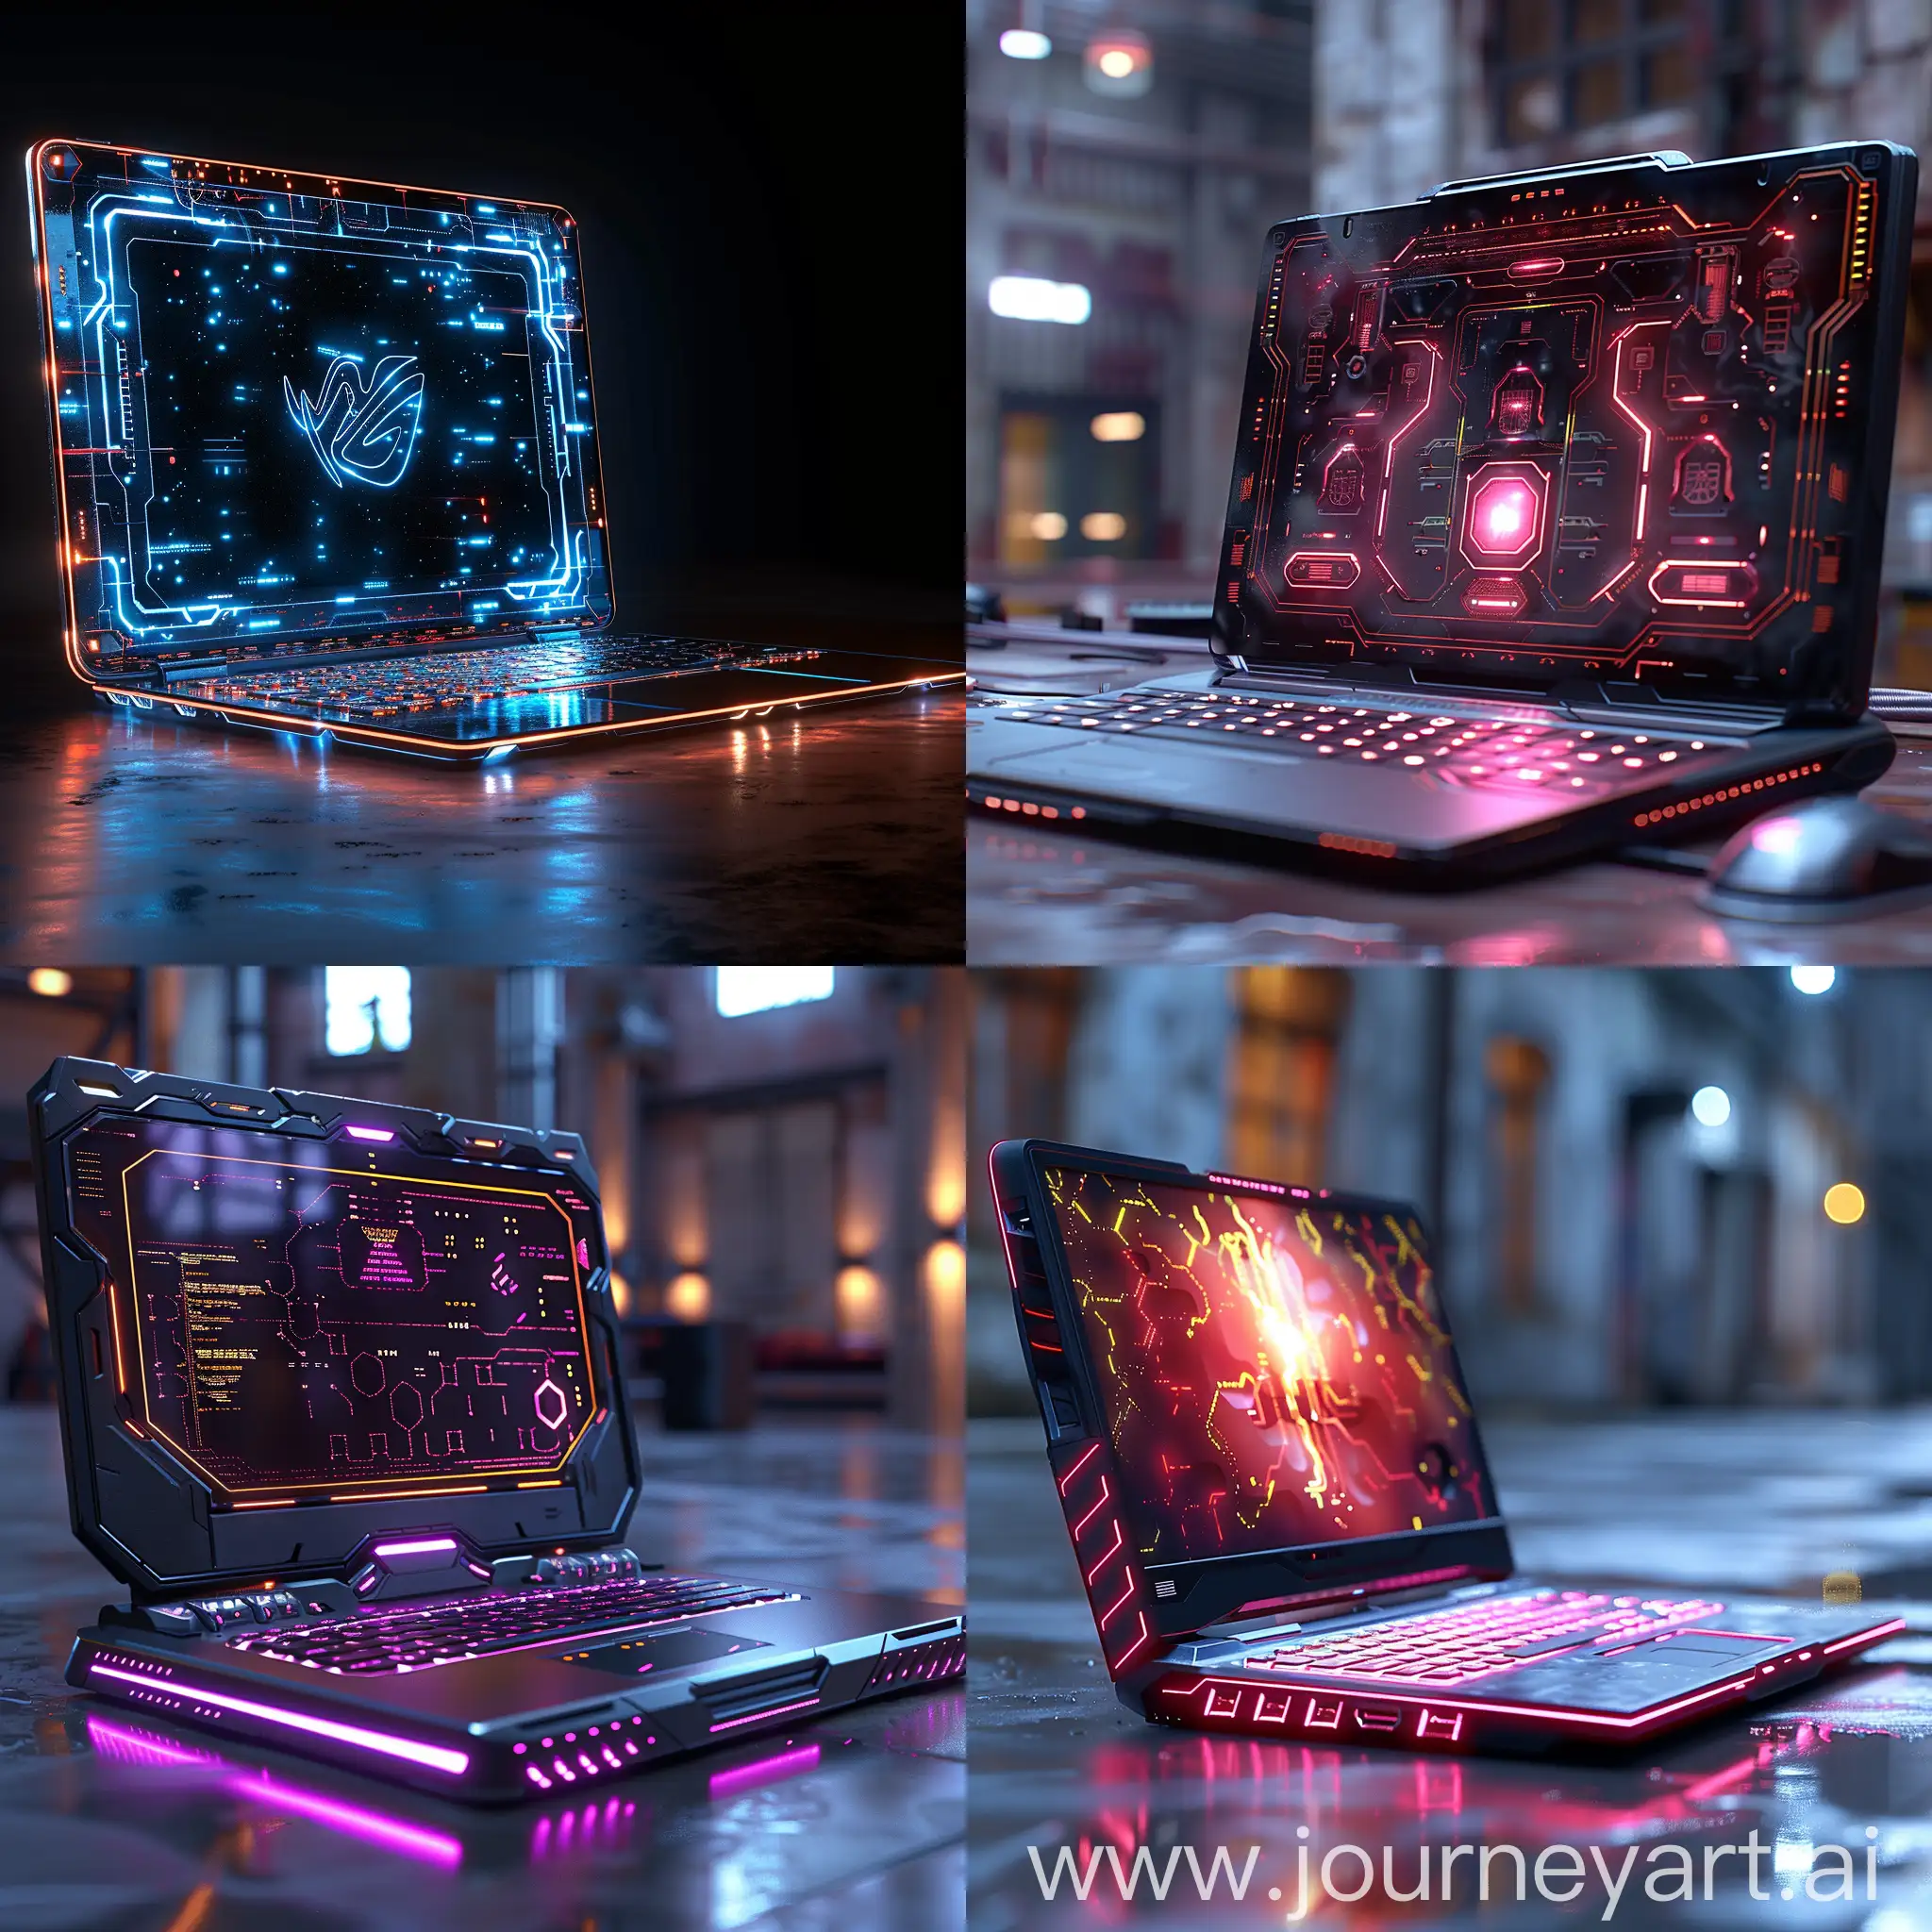 Futuristic-Laptop-in-HighTech-Octane-Render-Style